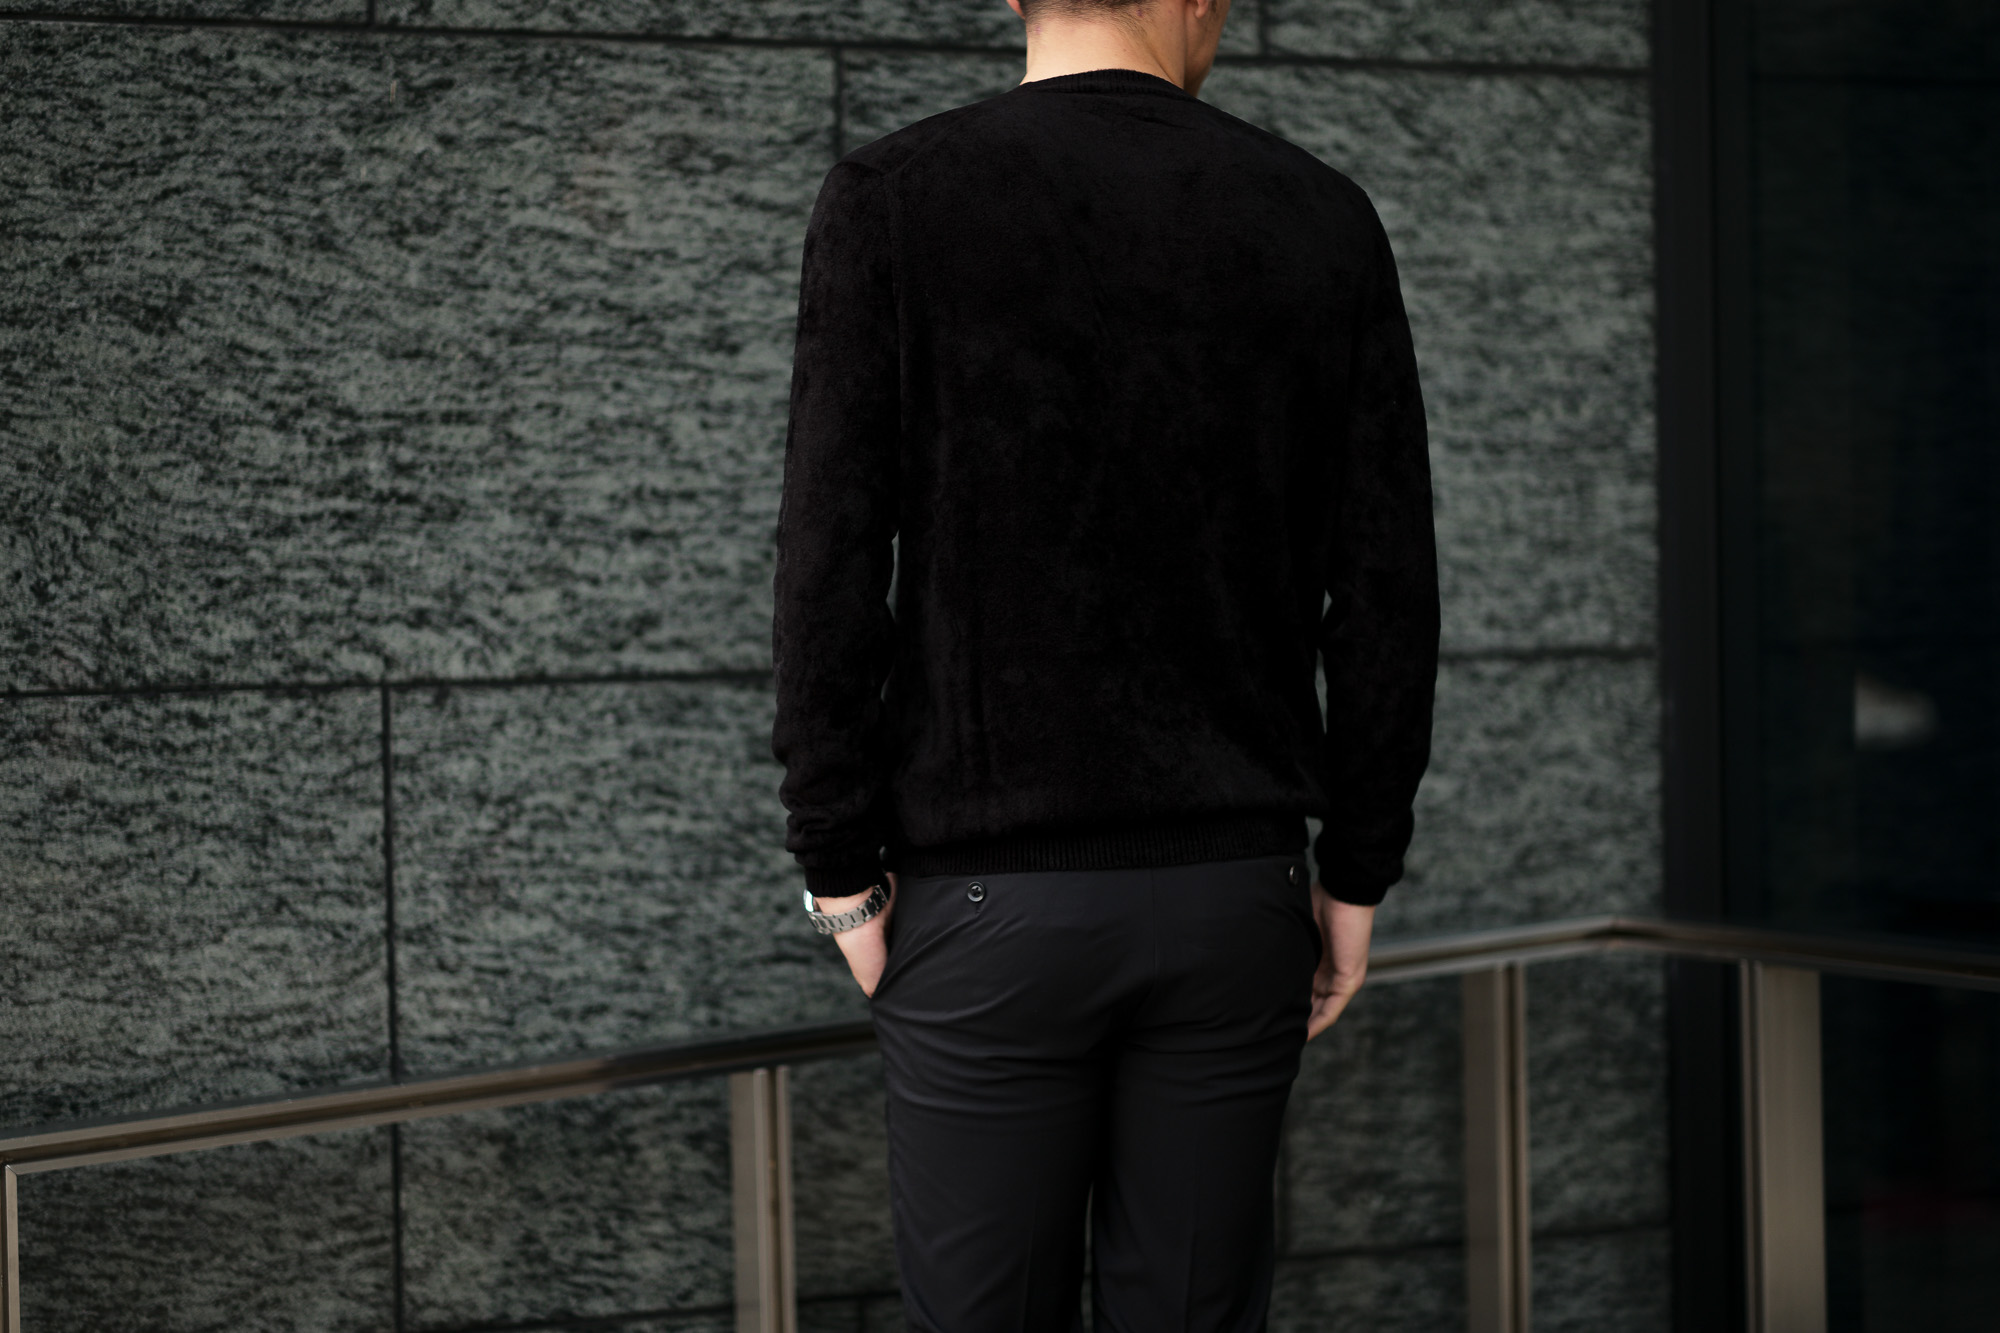 Settefili Cashmere (セッテフィーリ カシミア) Pile Knit Sweater パイルニットセーター BLACK (ブラック・GD03) made in italy (イタリア製)  2020 春夏新作 愛知 名古屋 altoediritto アルトエデリット